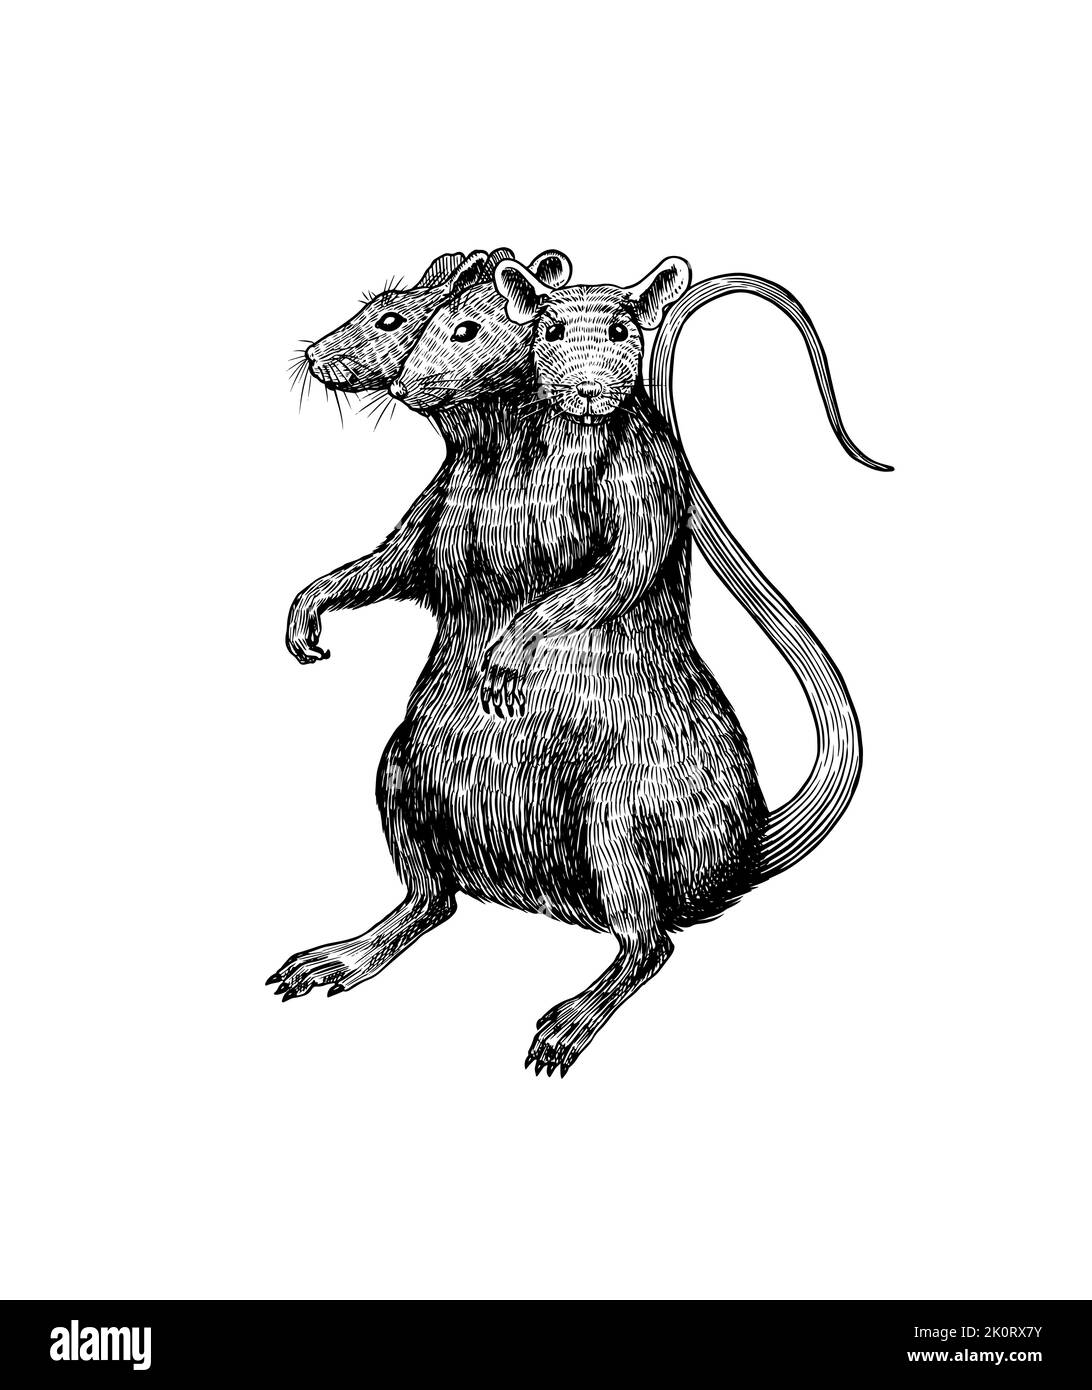 File:Rat King Illustration.svg - Wikipedia